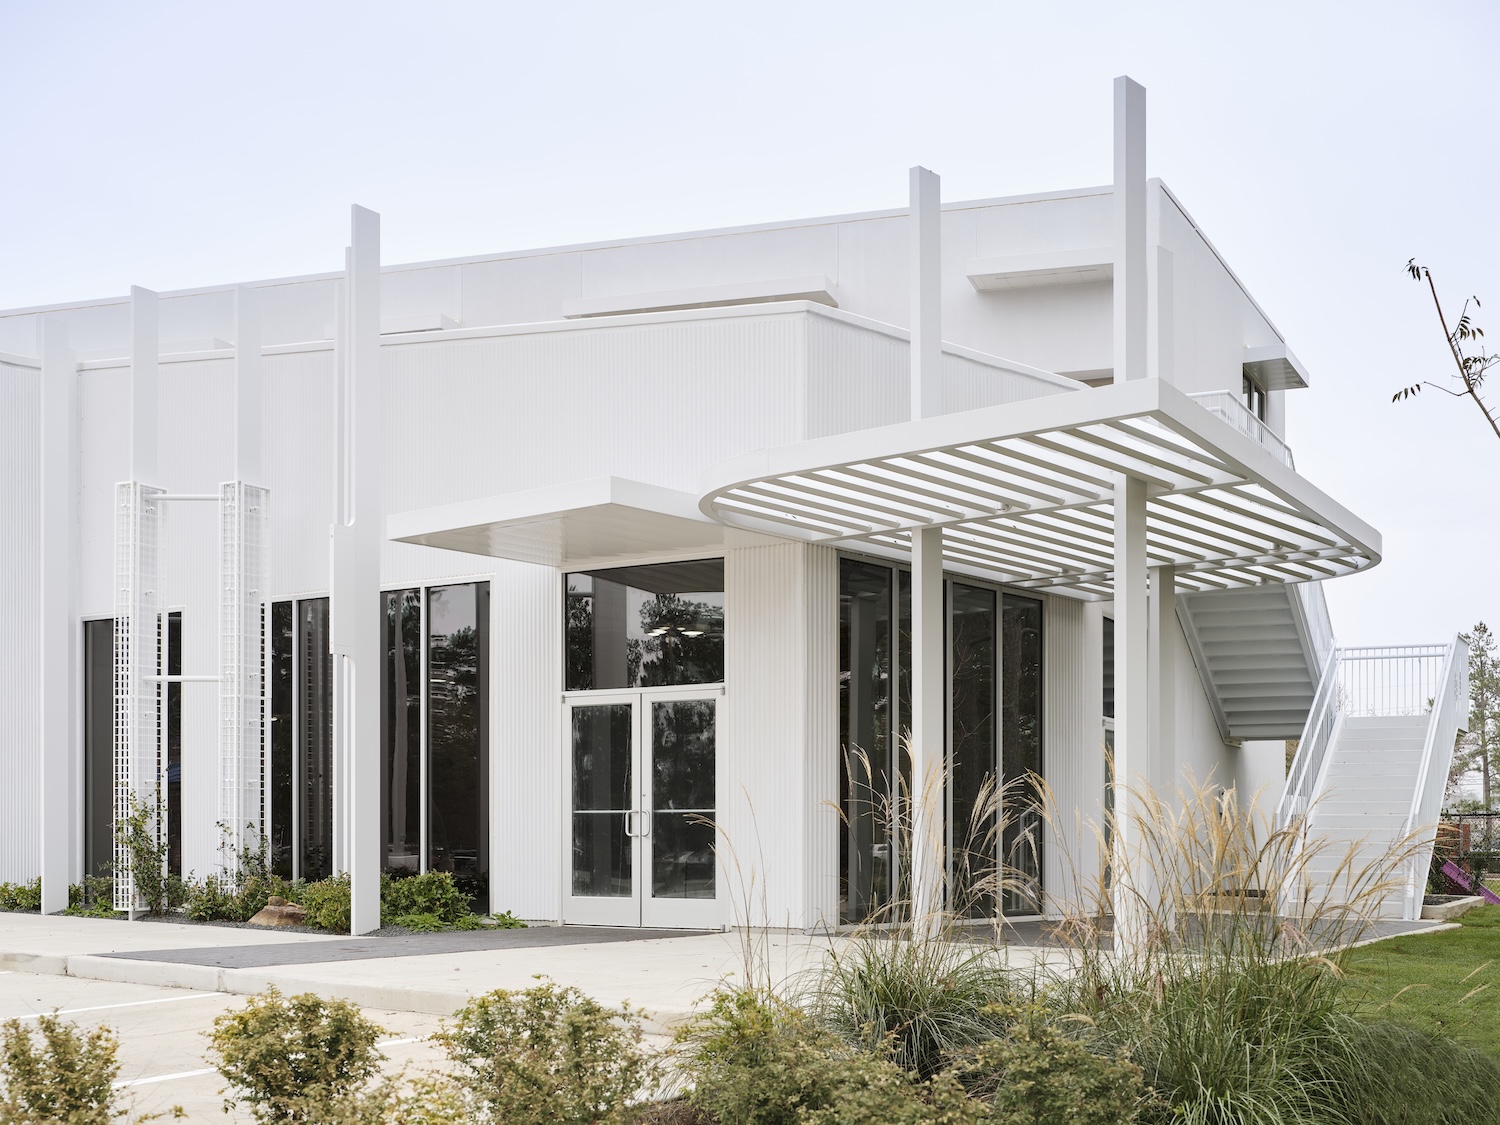 Promenade Houston - building designed to combat extreme heat